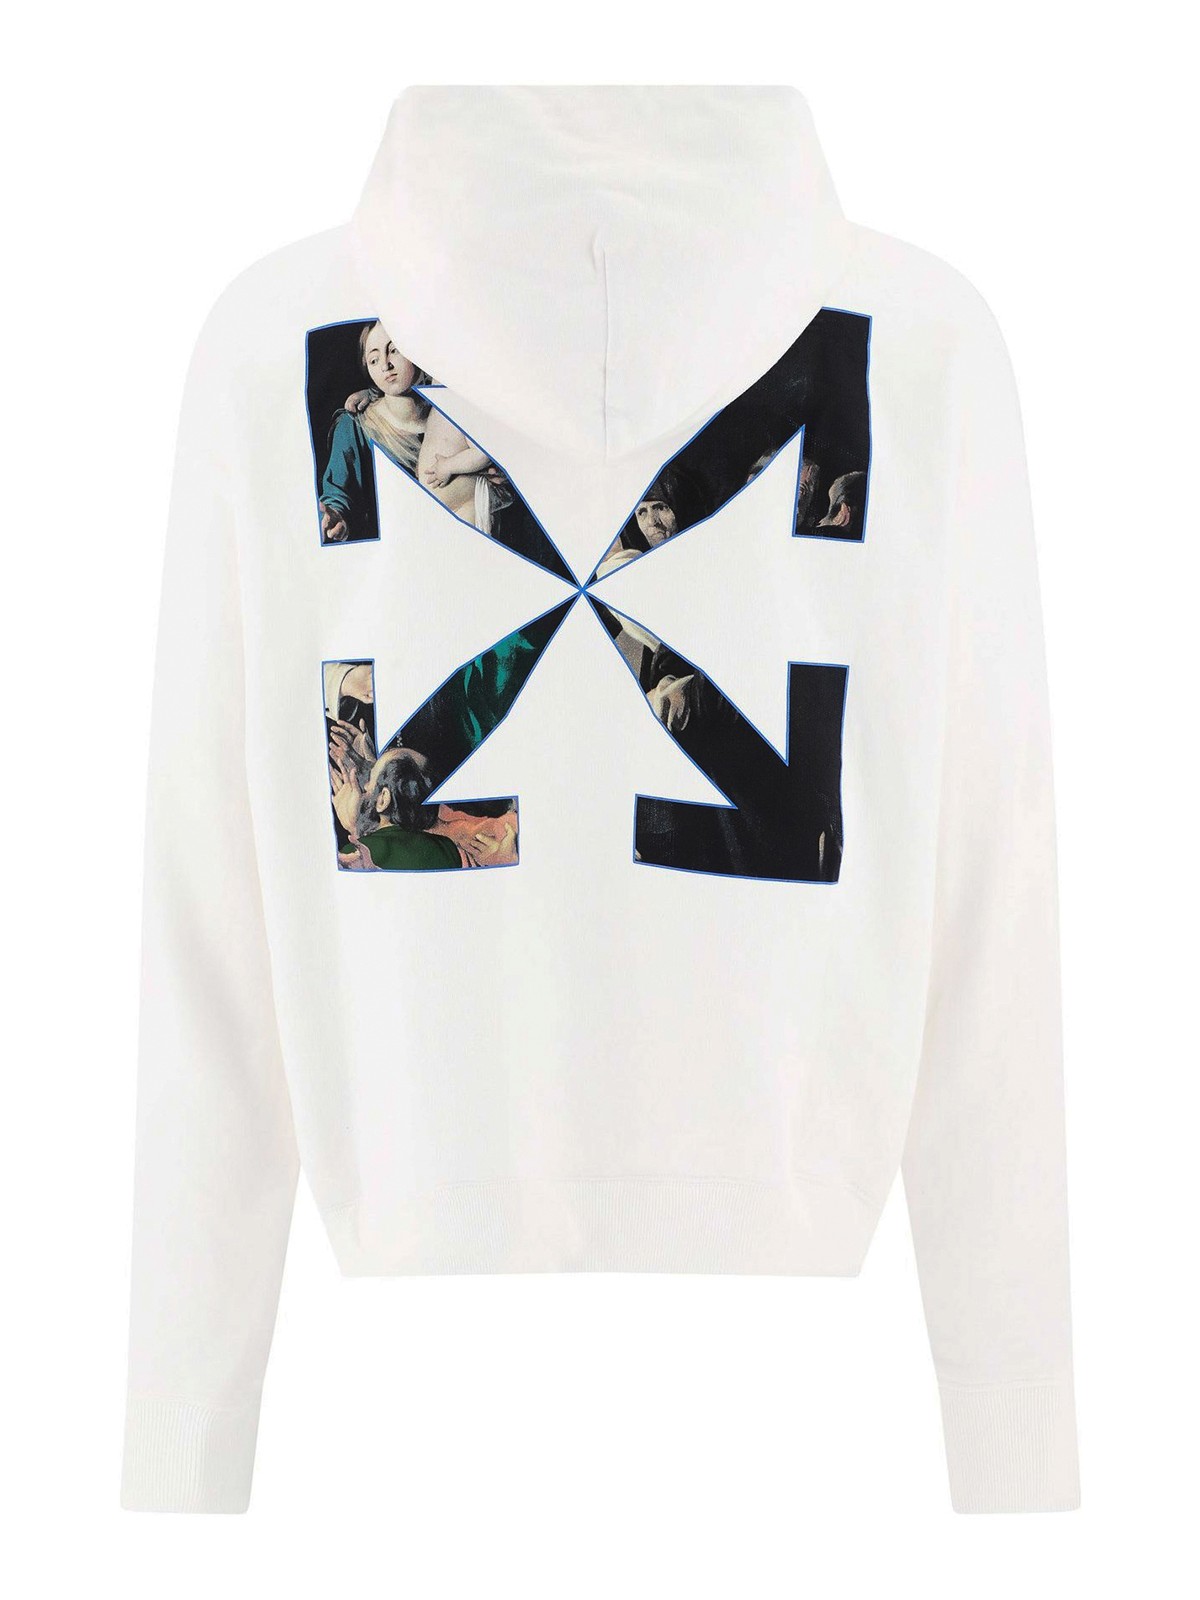 Men's Luxury Sweatshirt - Off-White Hoodie Caravaggio